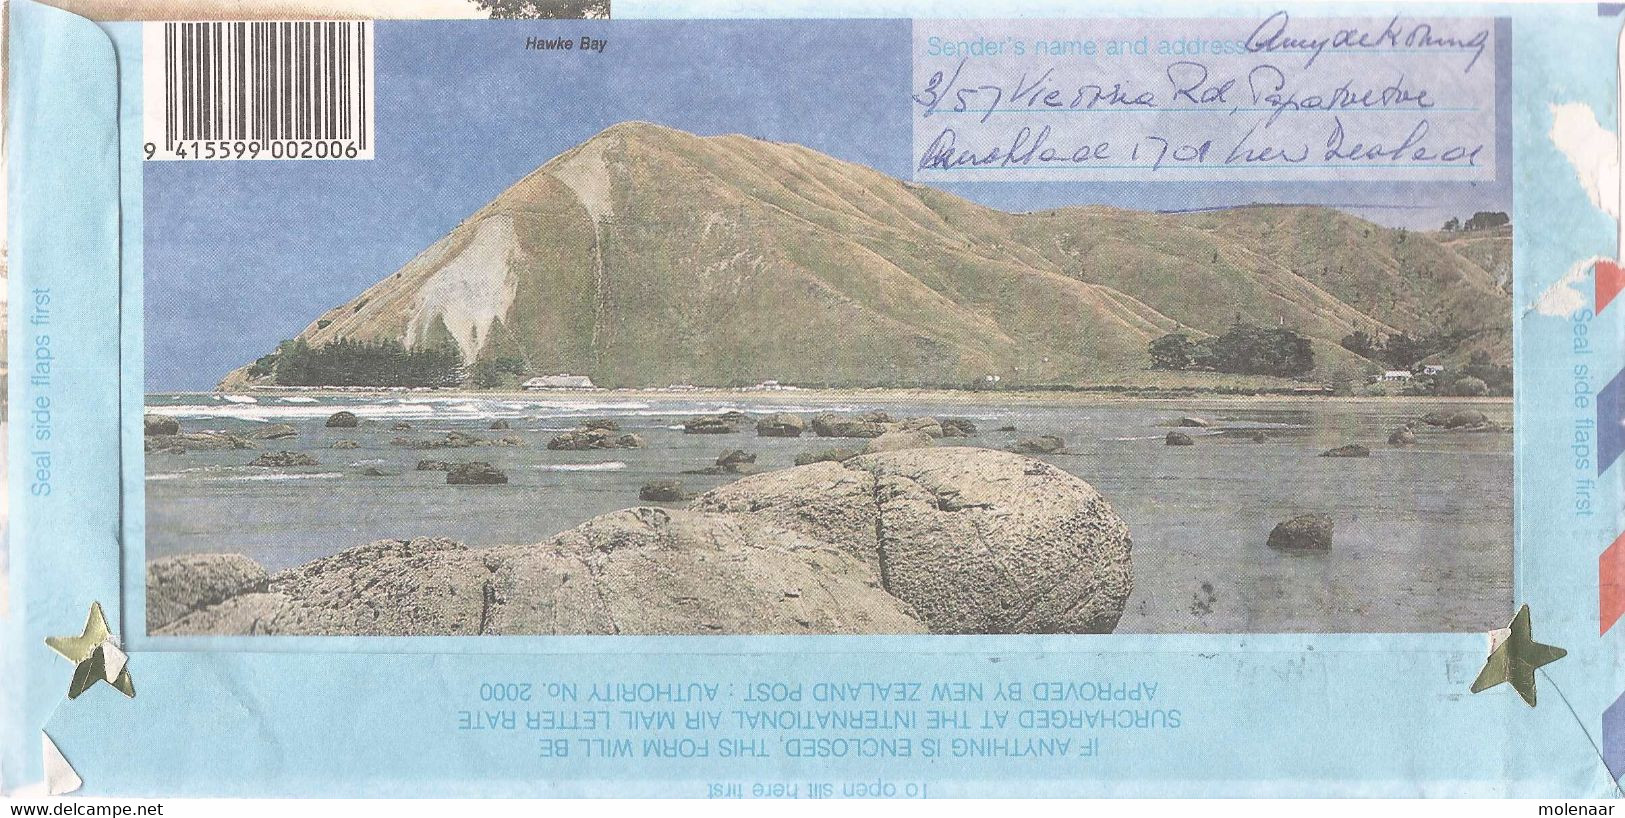 New Zealand Aerogramme Uit 1999 Gebruikt (7384) - Postal Stationery